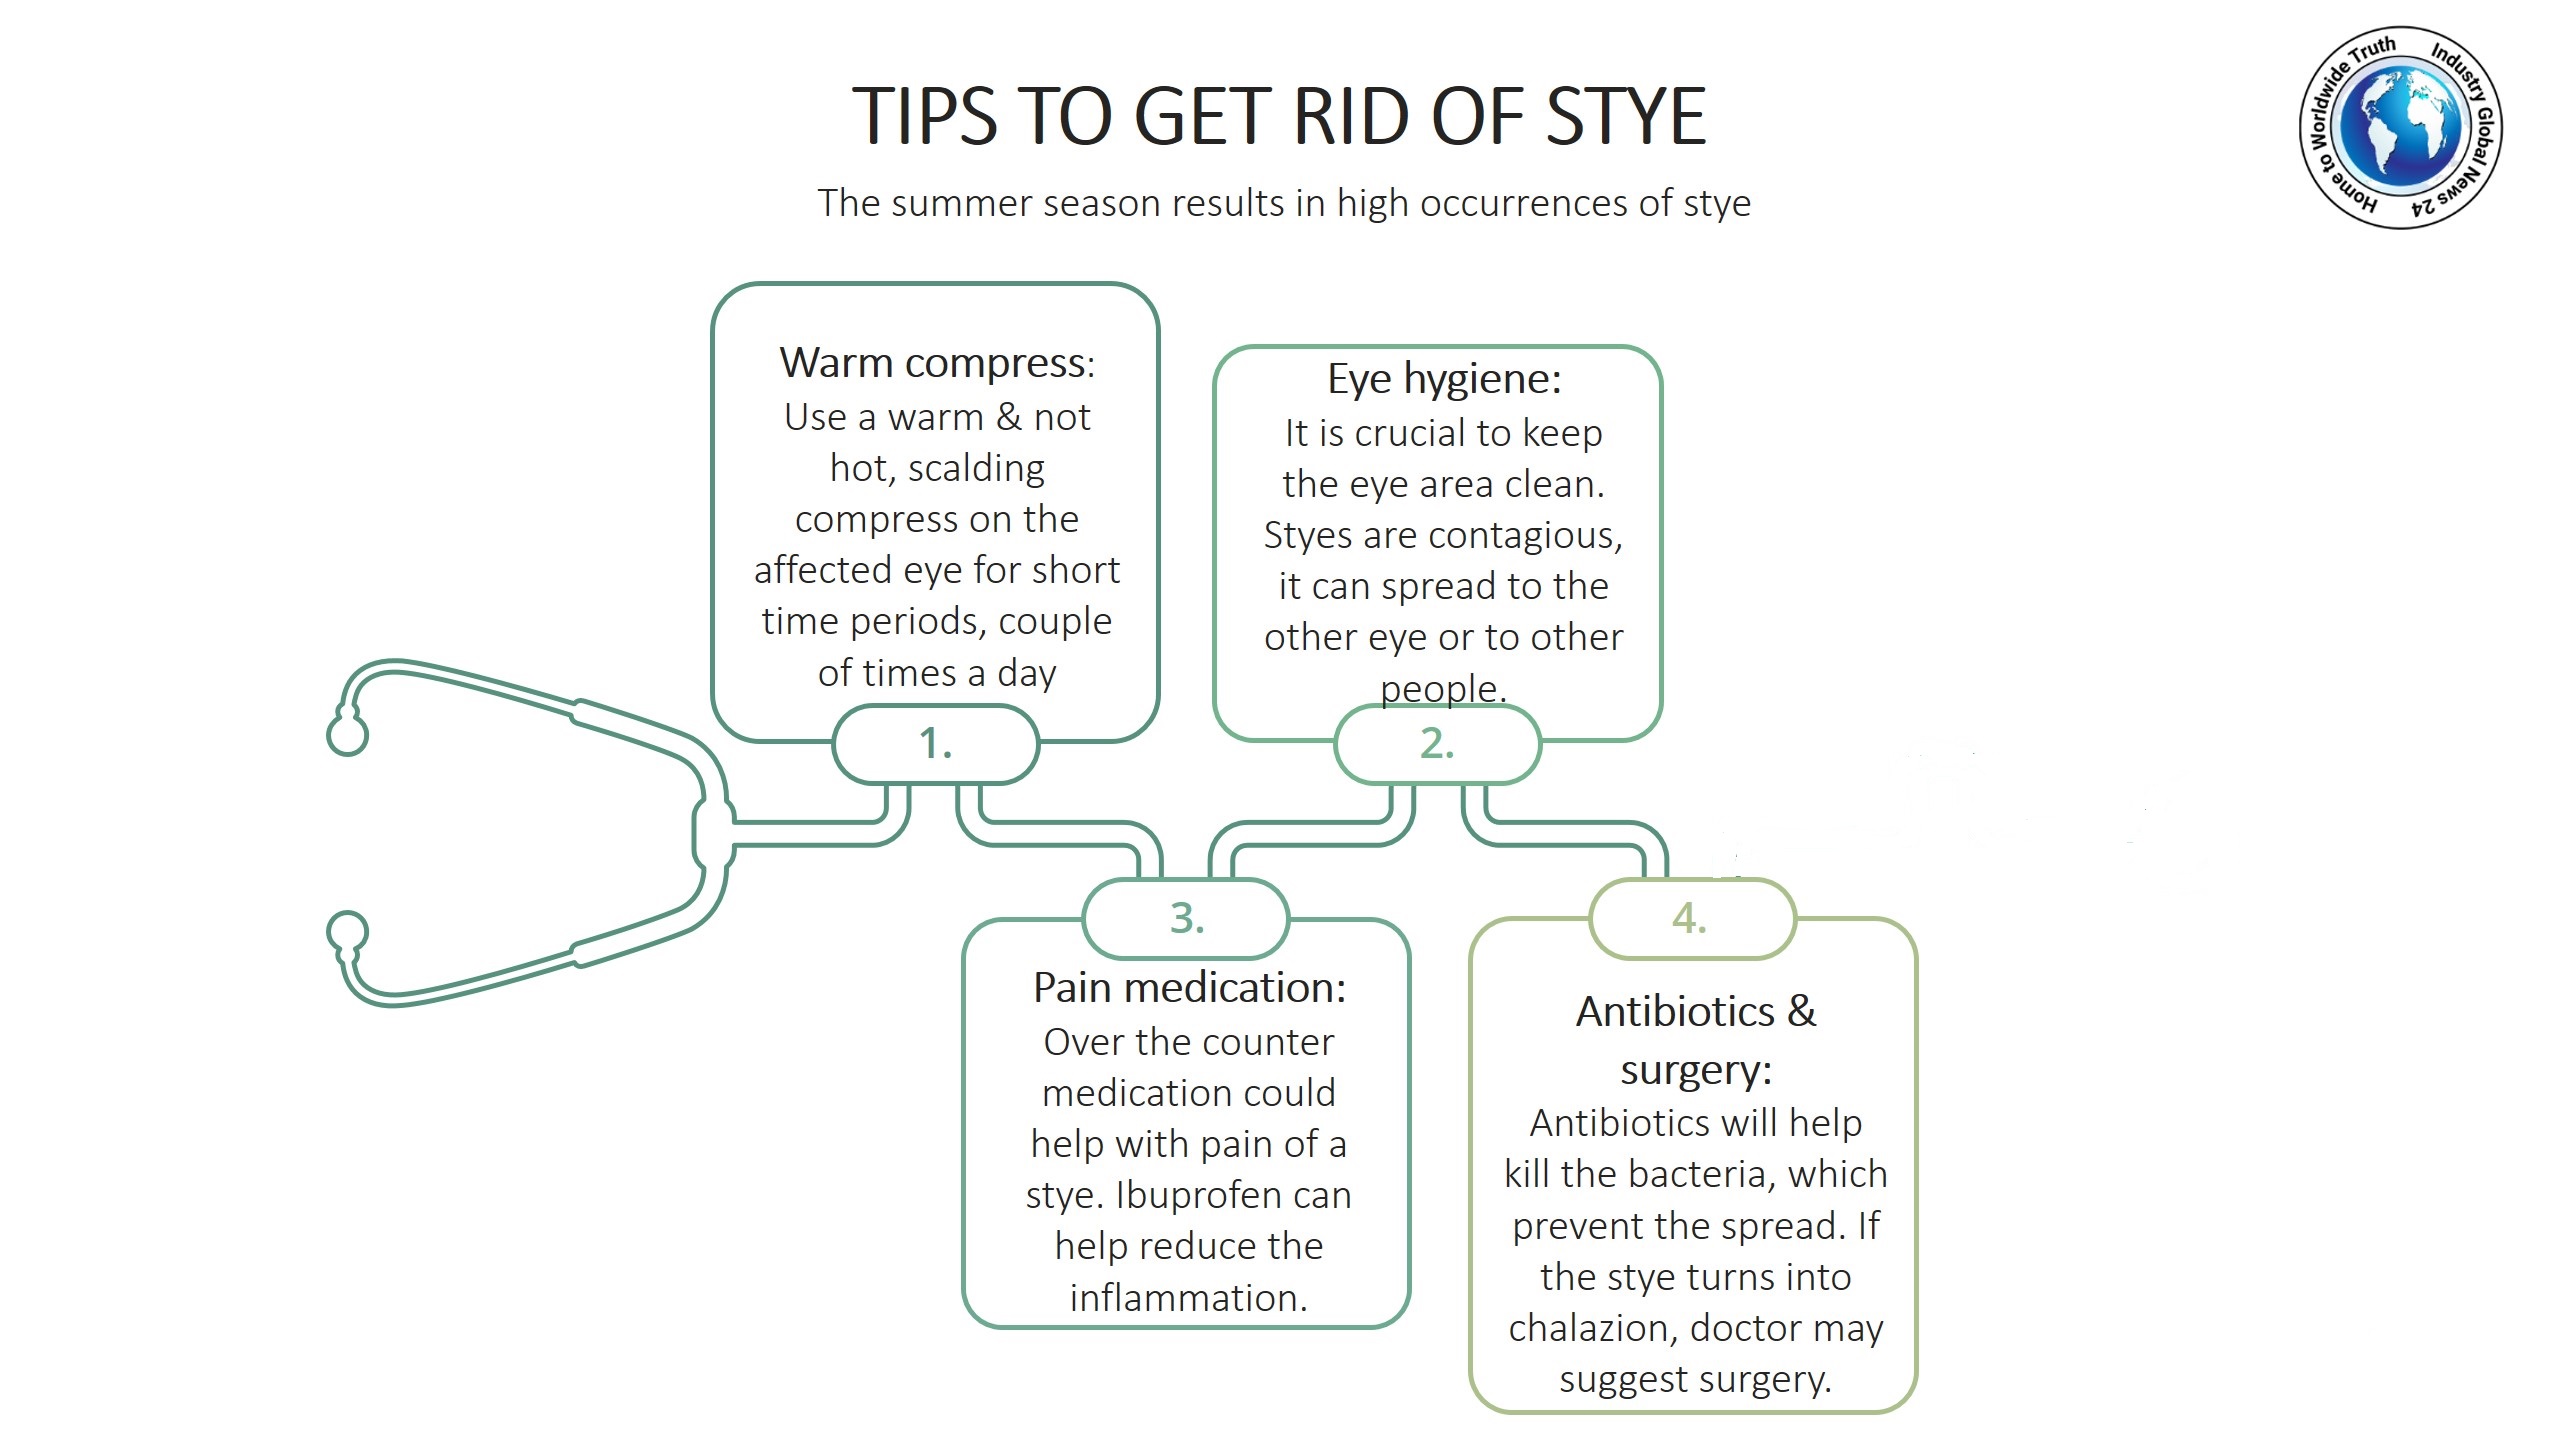 Tips to get rid of stye